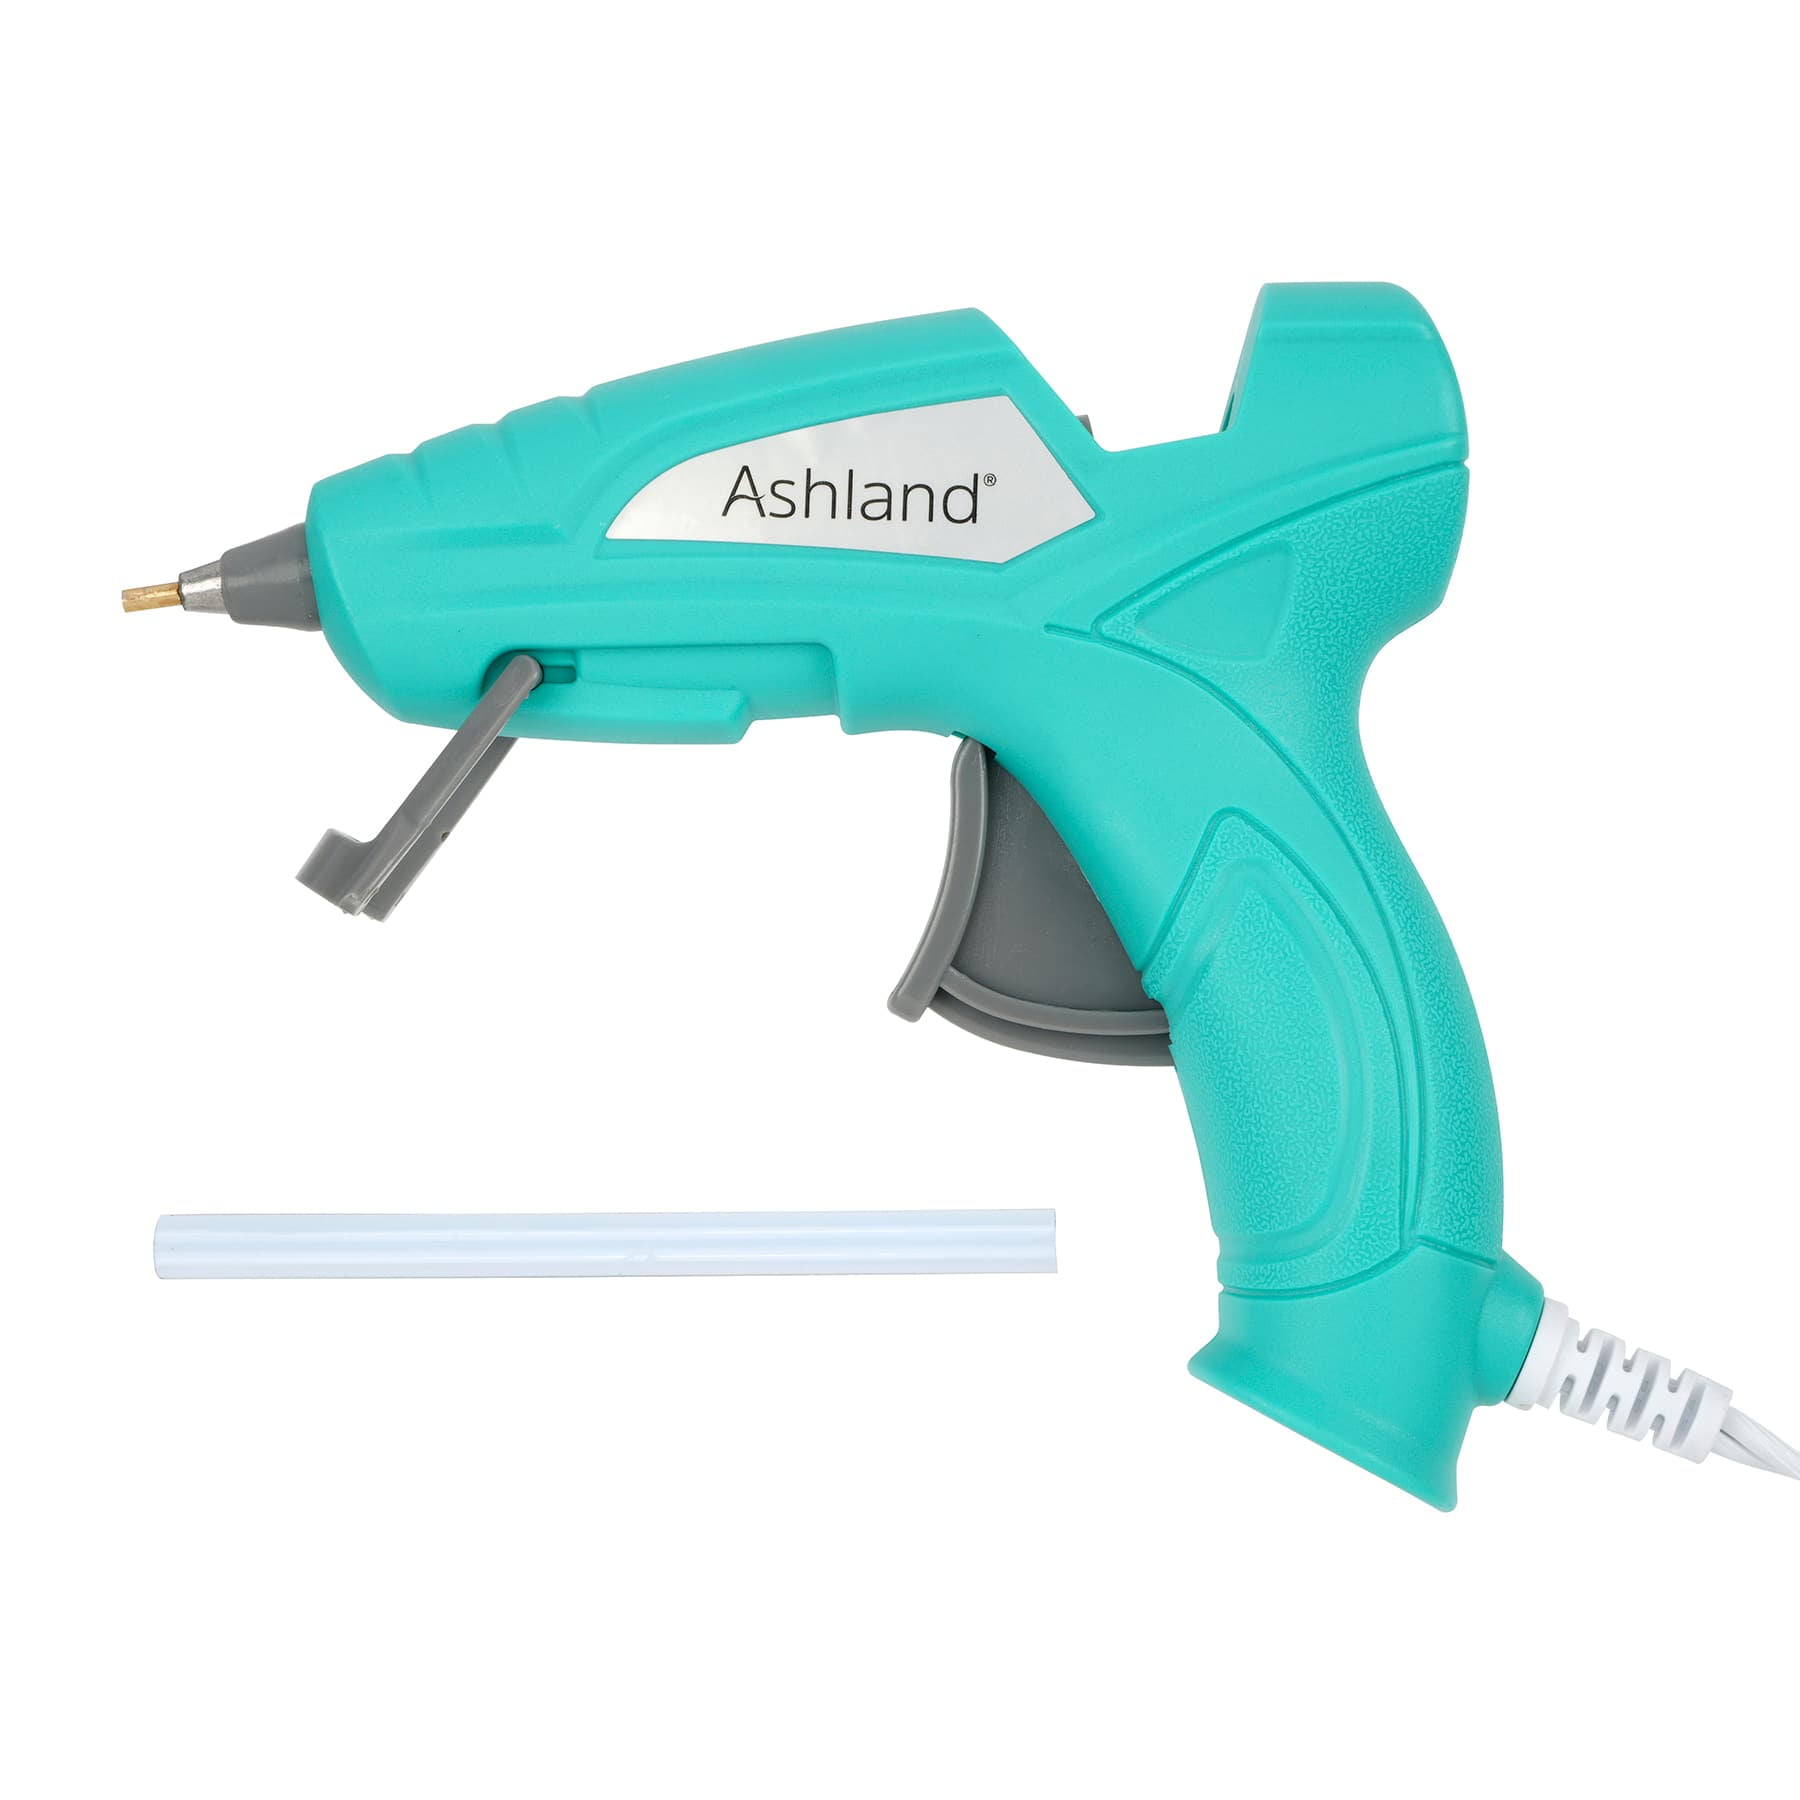 Mini High Temperature Glue Gun by Ashland®